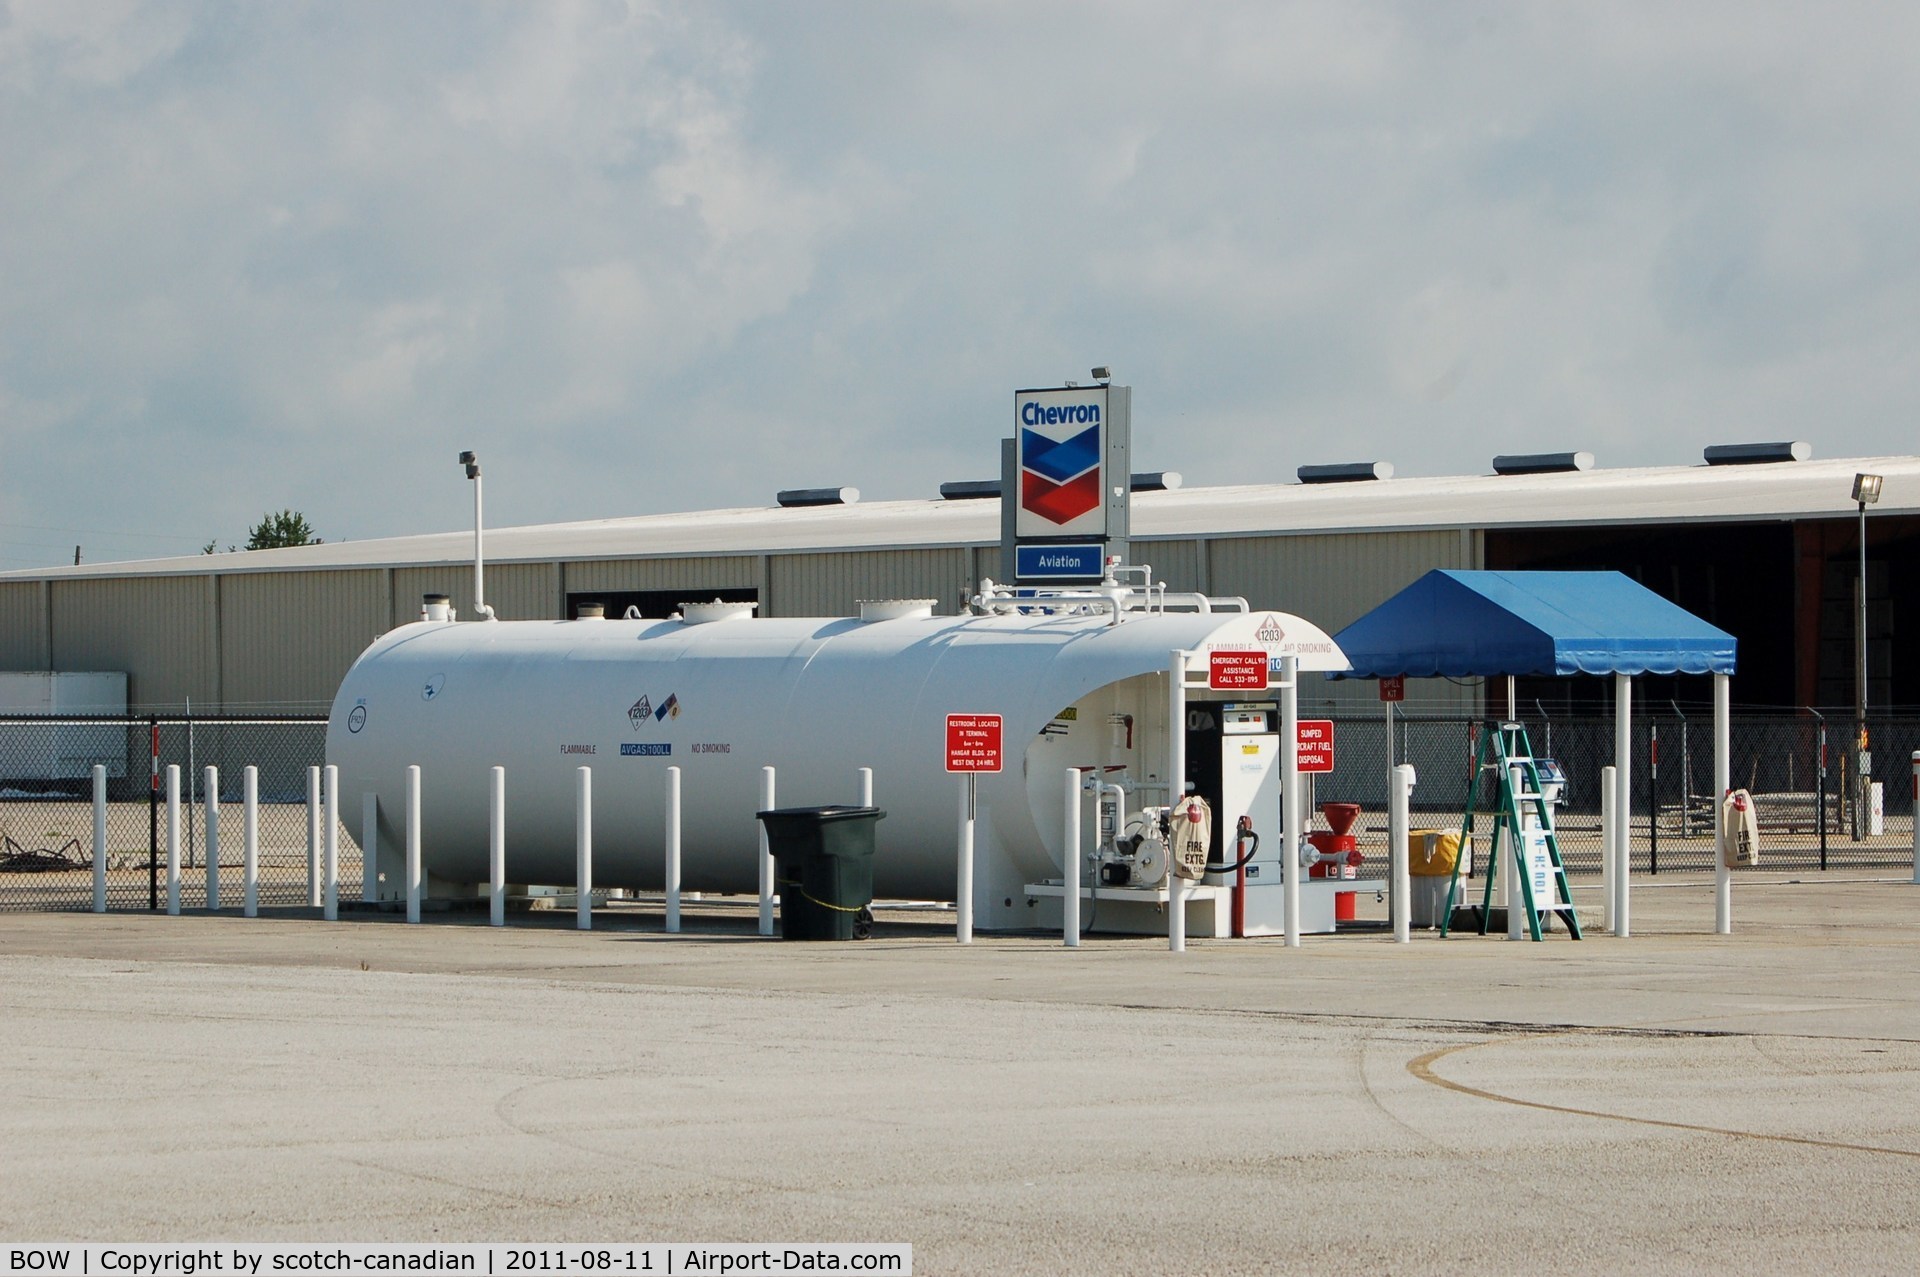 Bartow Municipal Airport (BOW) - Self Service Fuel at Bartow Municipal Airport, Bartow, FL